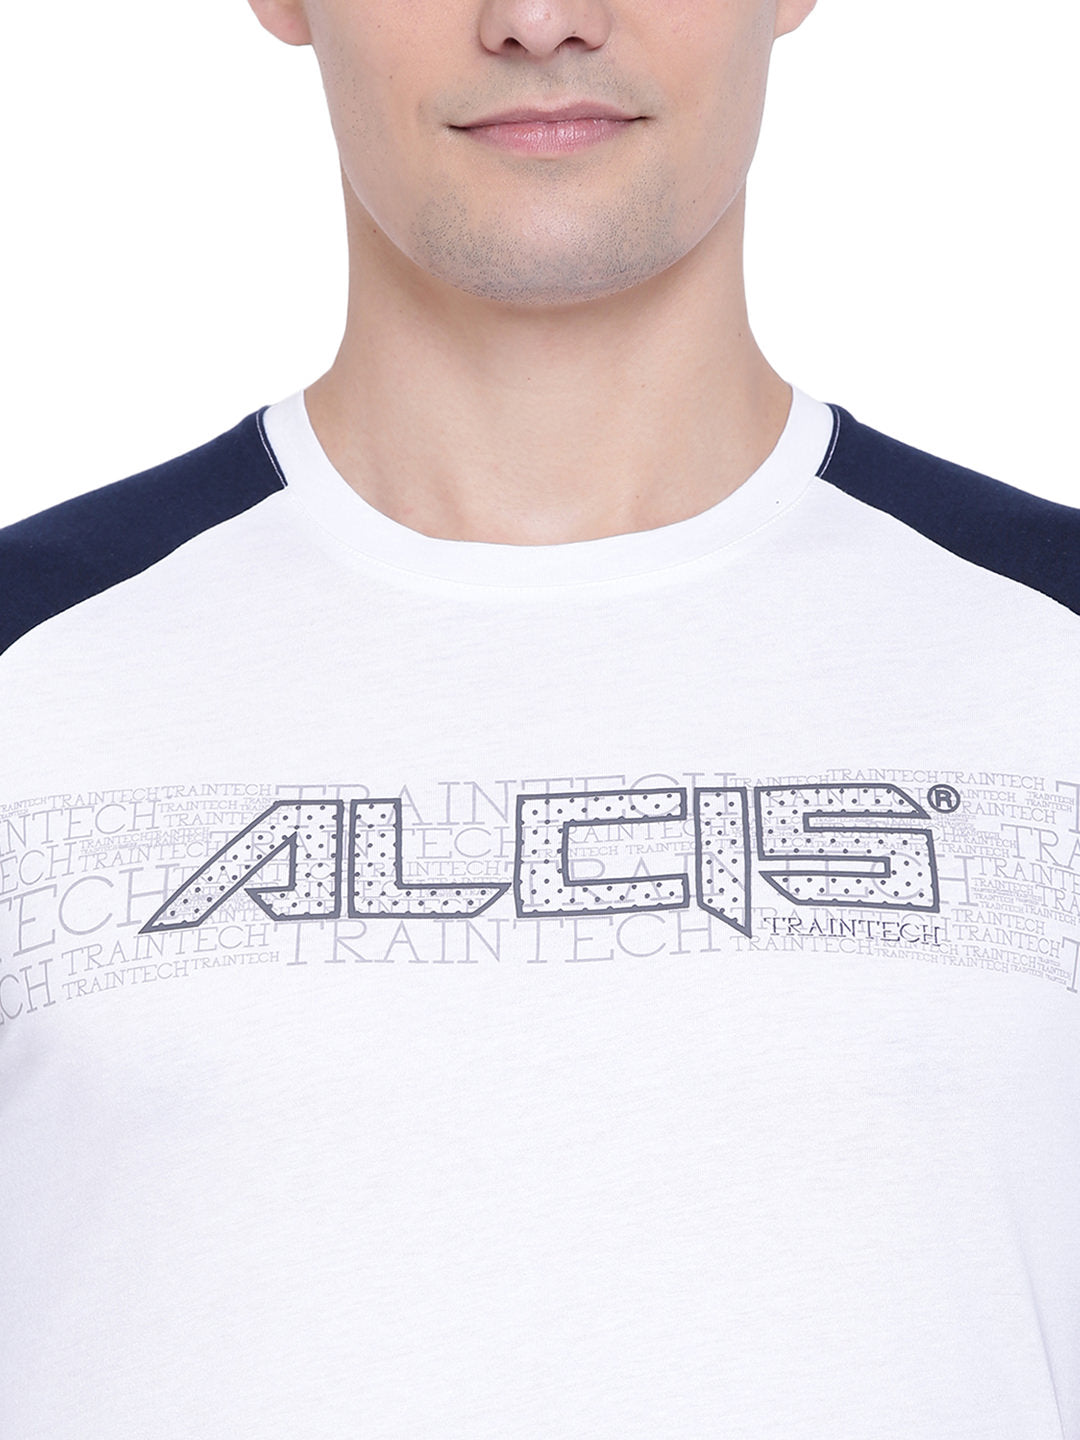 Alcis Men White Printed Round Neck T-Shirt